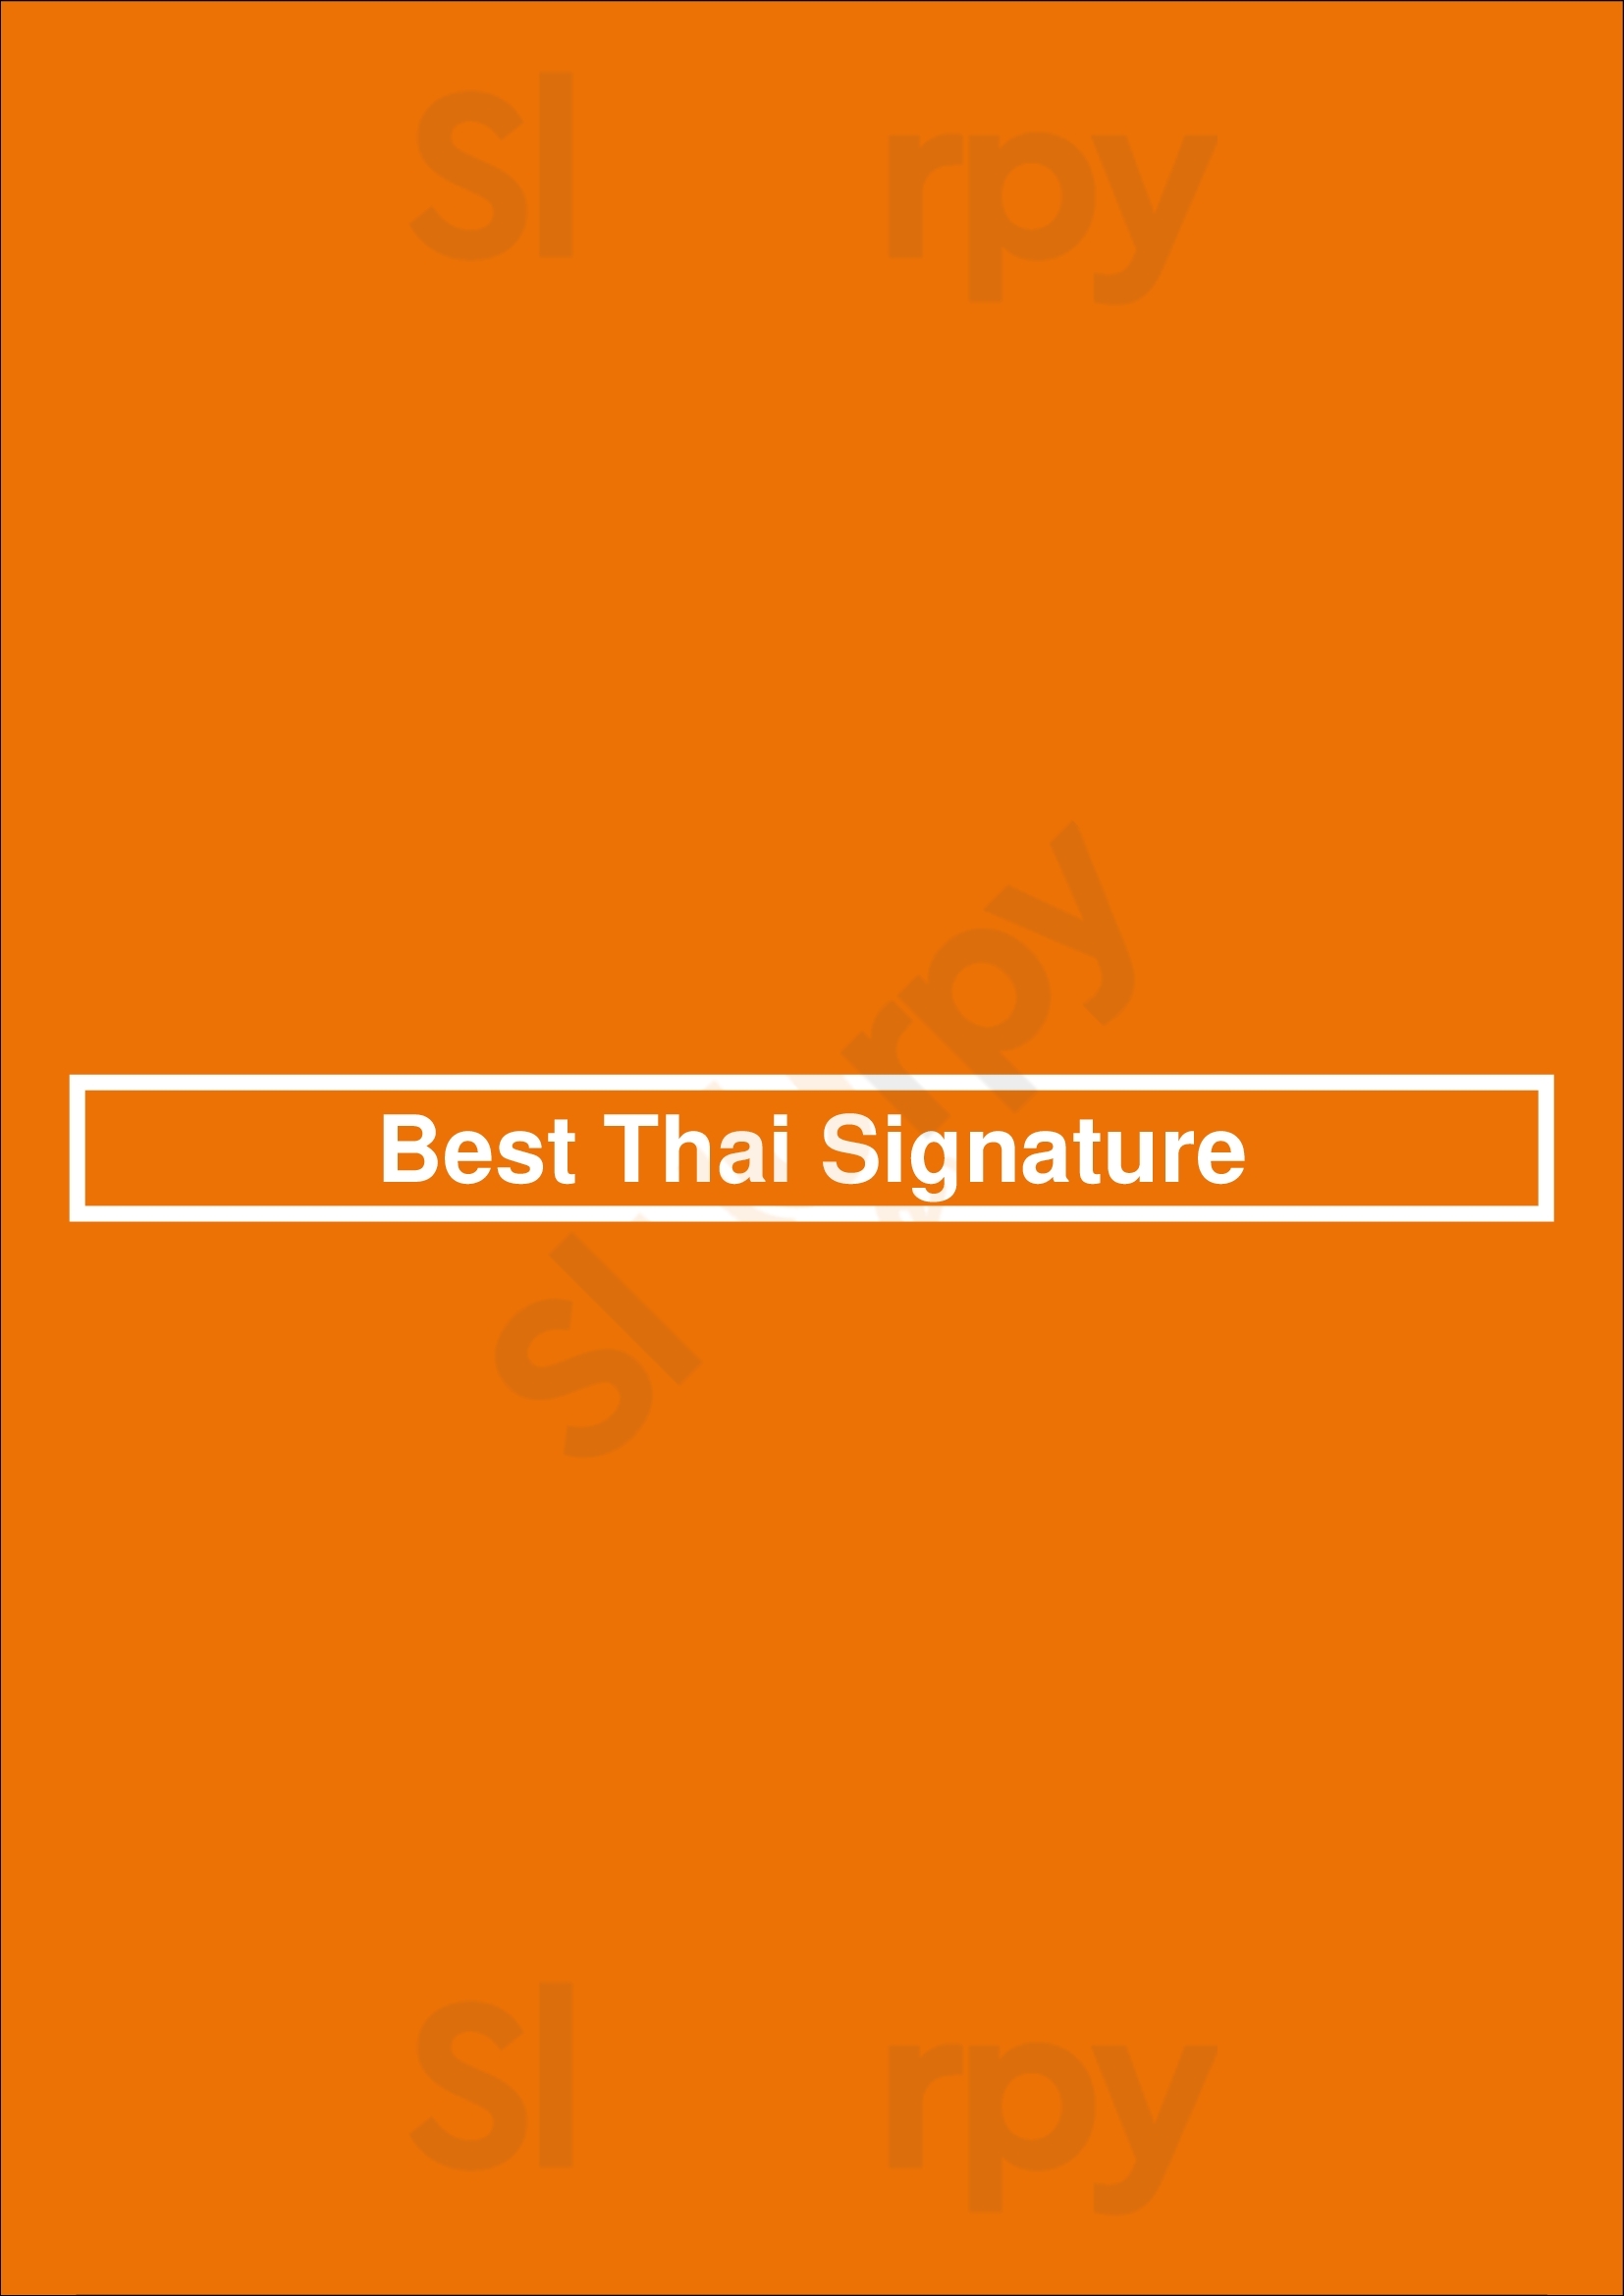 Best Thai Signature - Dallas (frankford Rd) Dallas Menu - 1